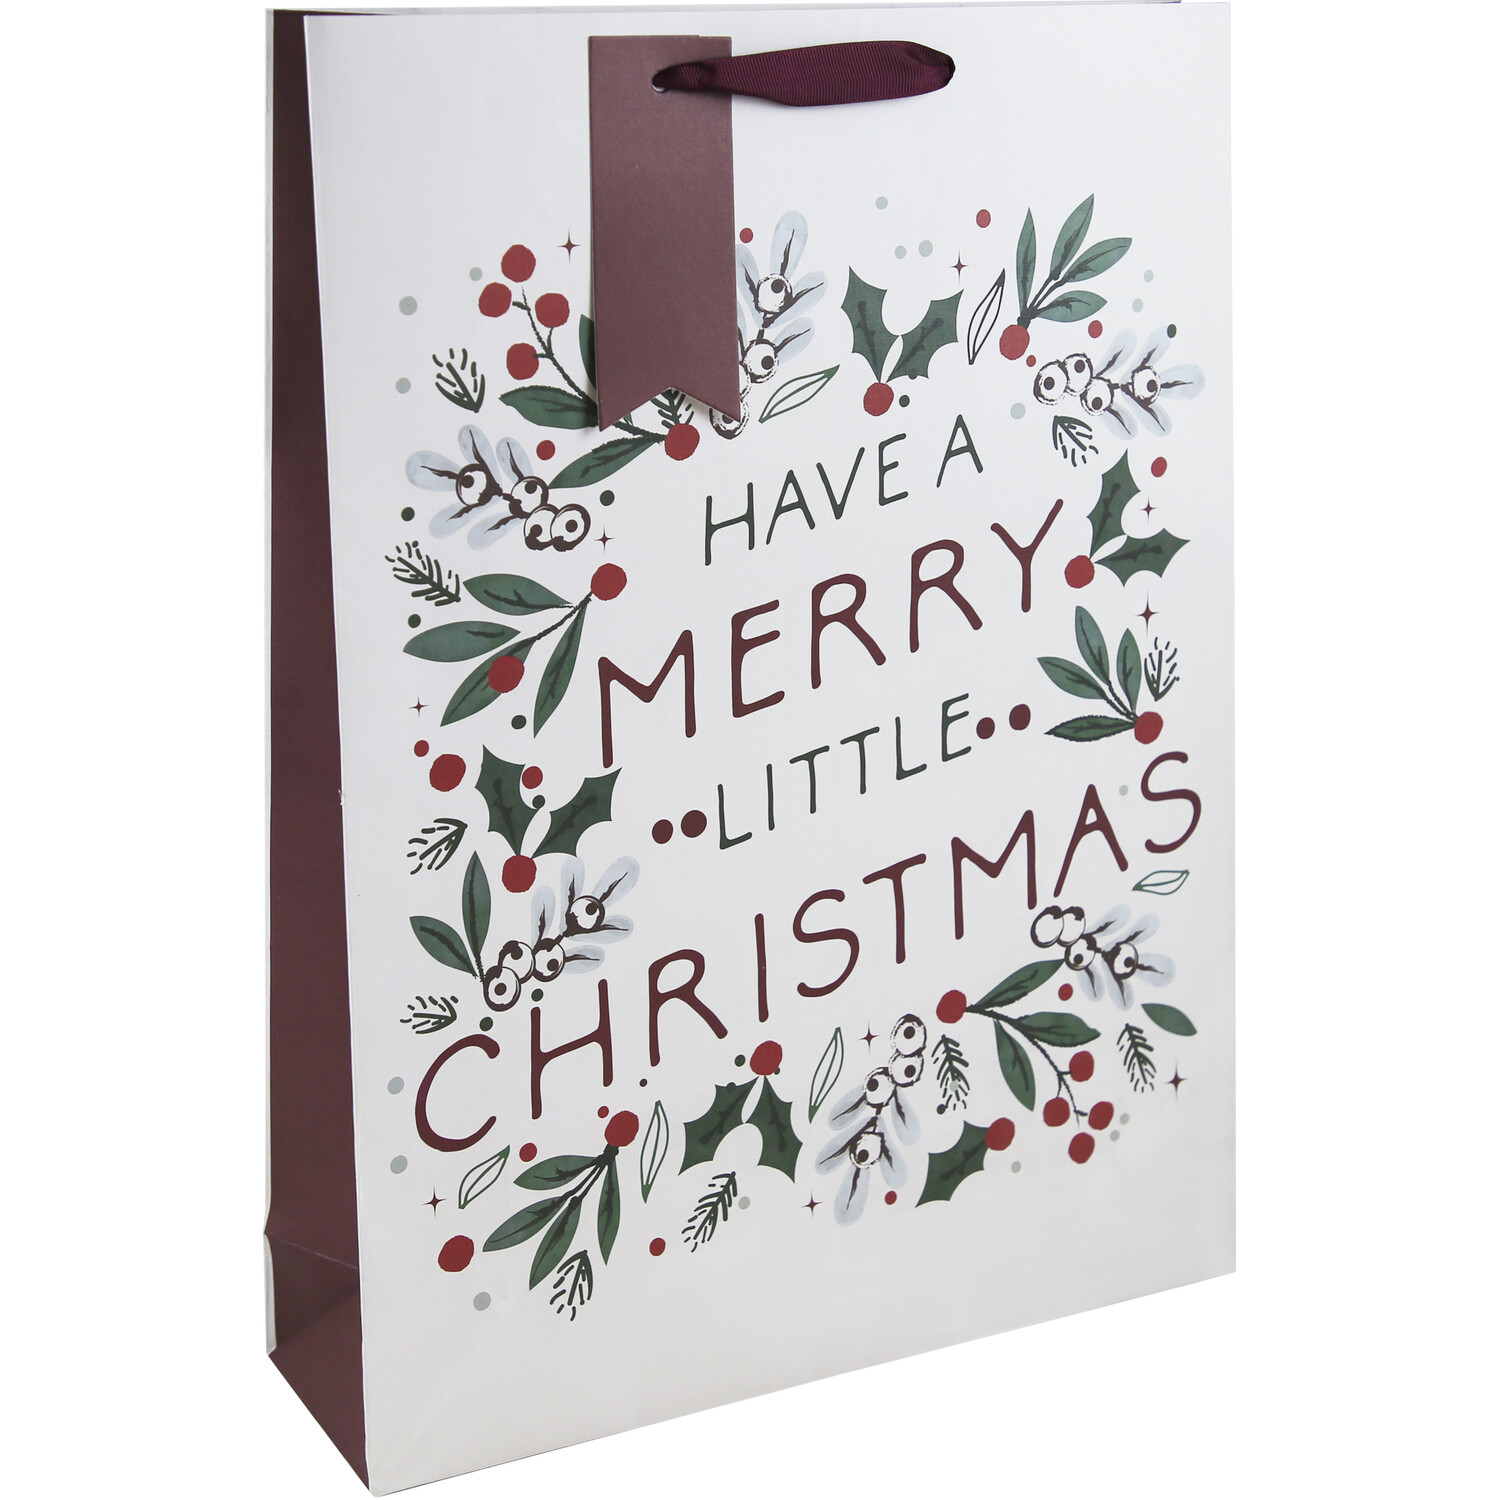 Merry Christmas Holly Gift Bag - White Image 1